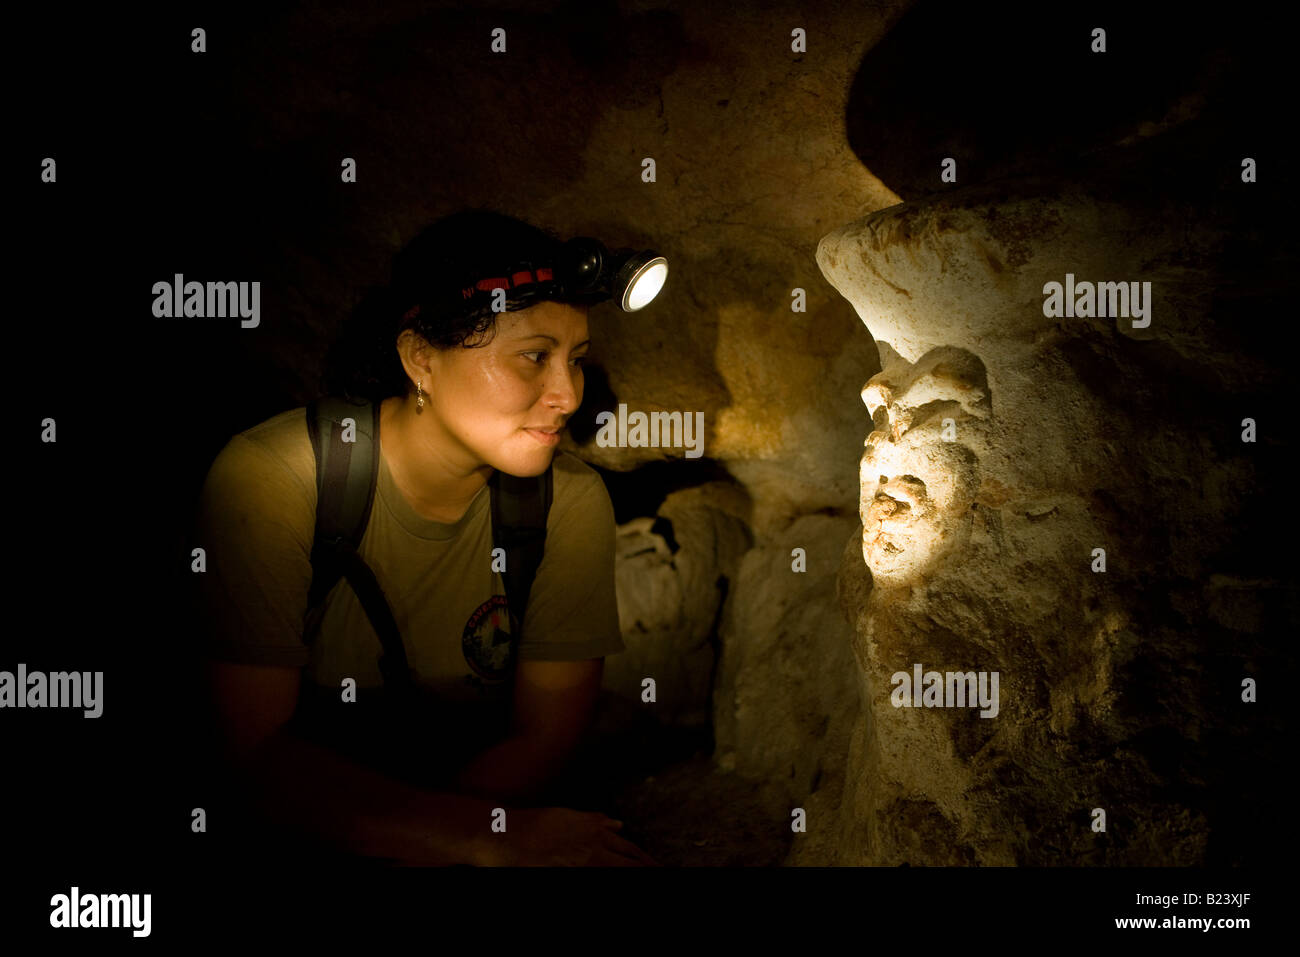 Mayan figure in underground cavern, Belize. Stock Photo